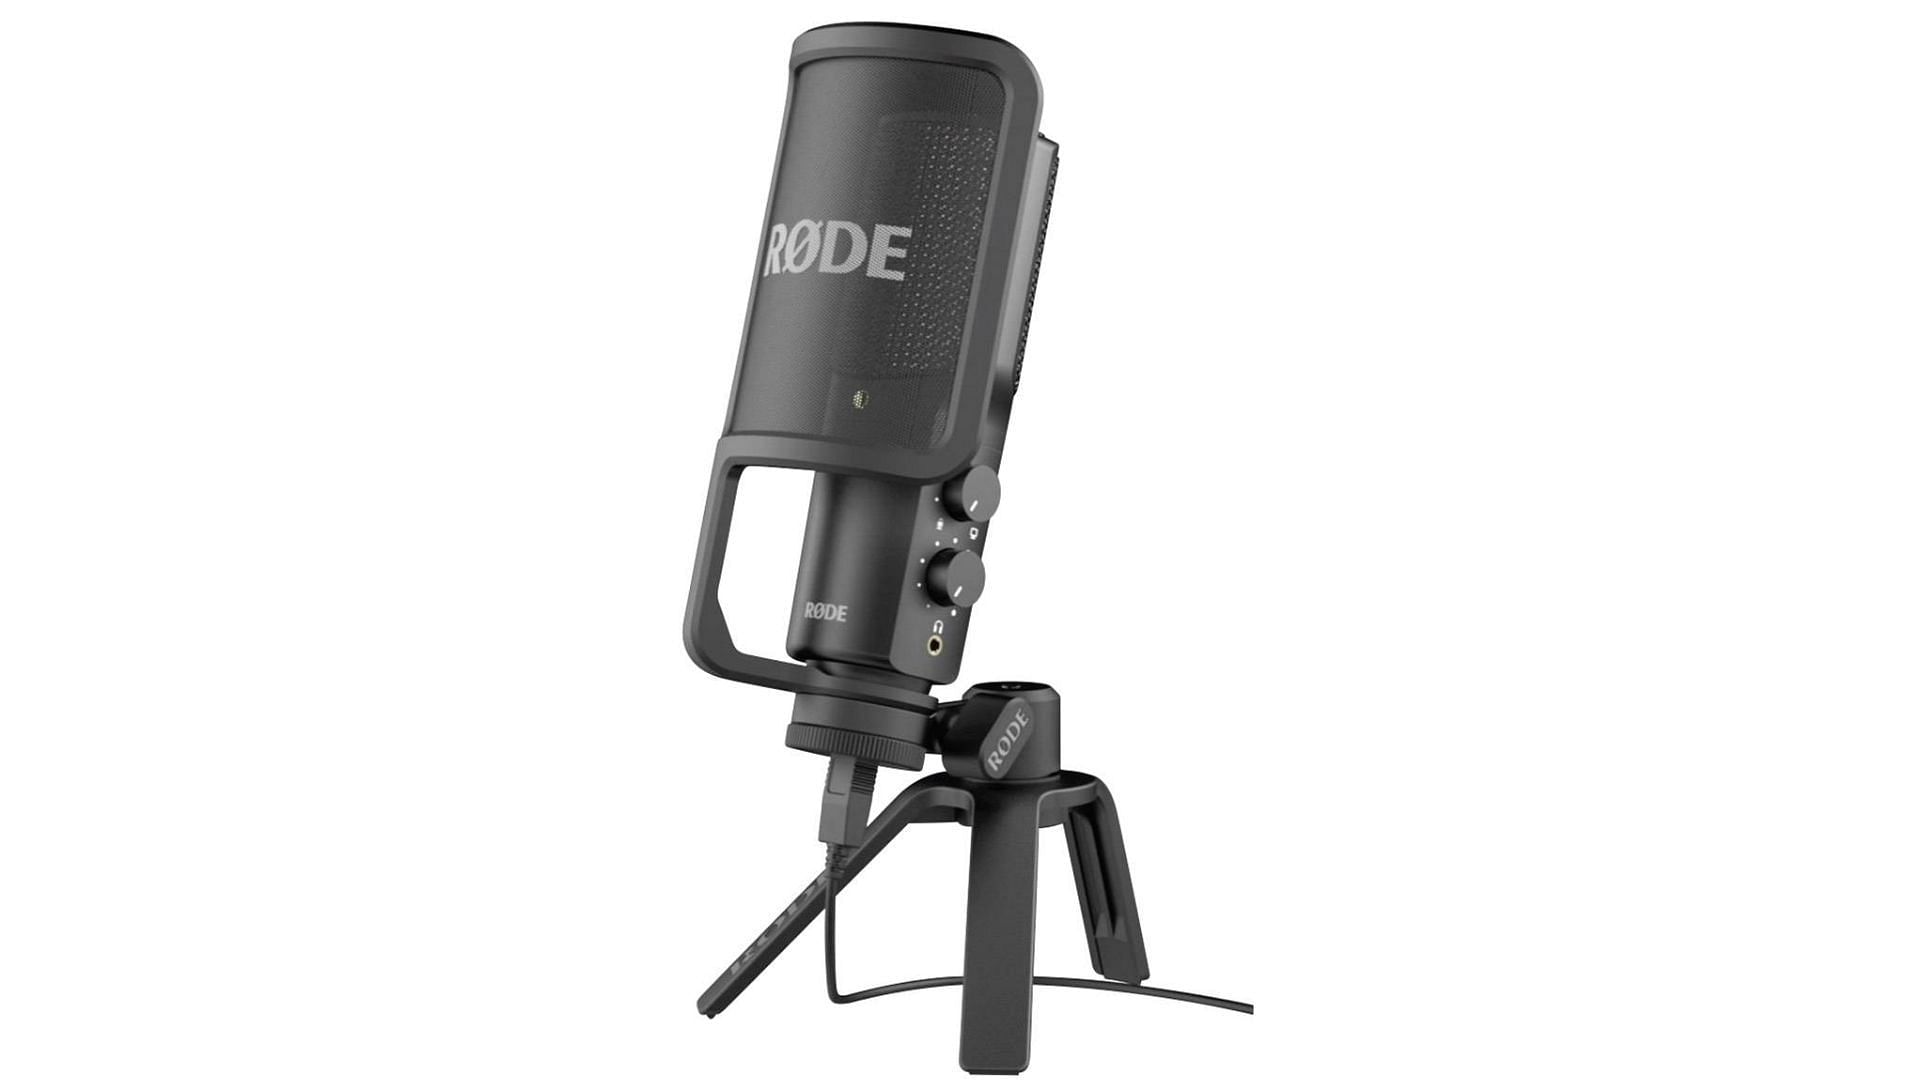 The Rode NT-USB microphone (Image via B&amp;H)